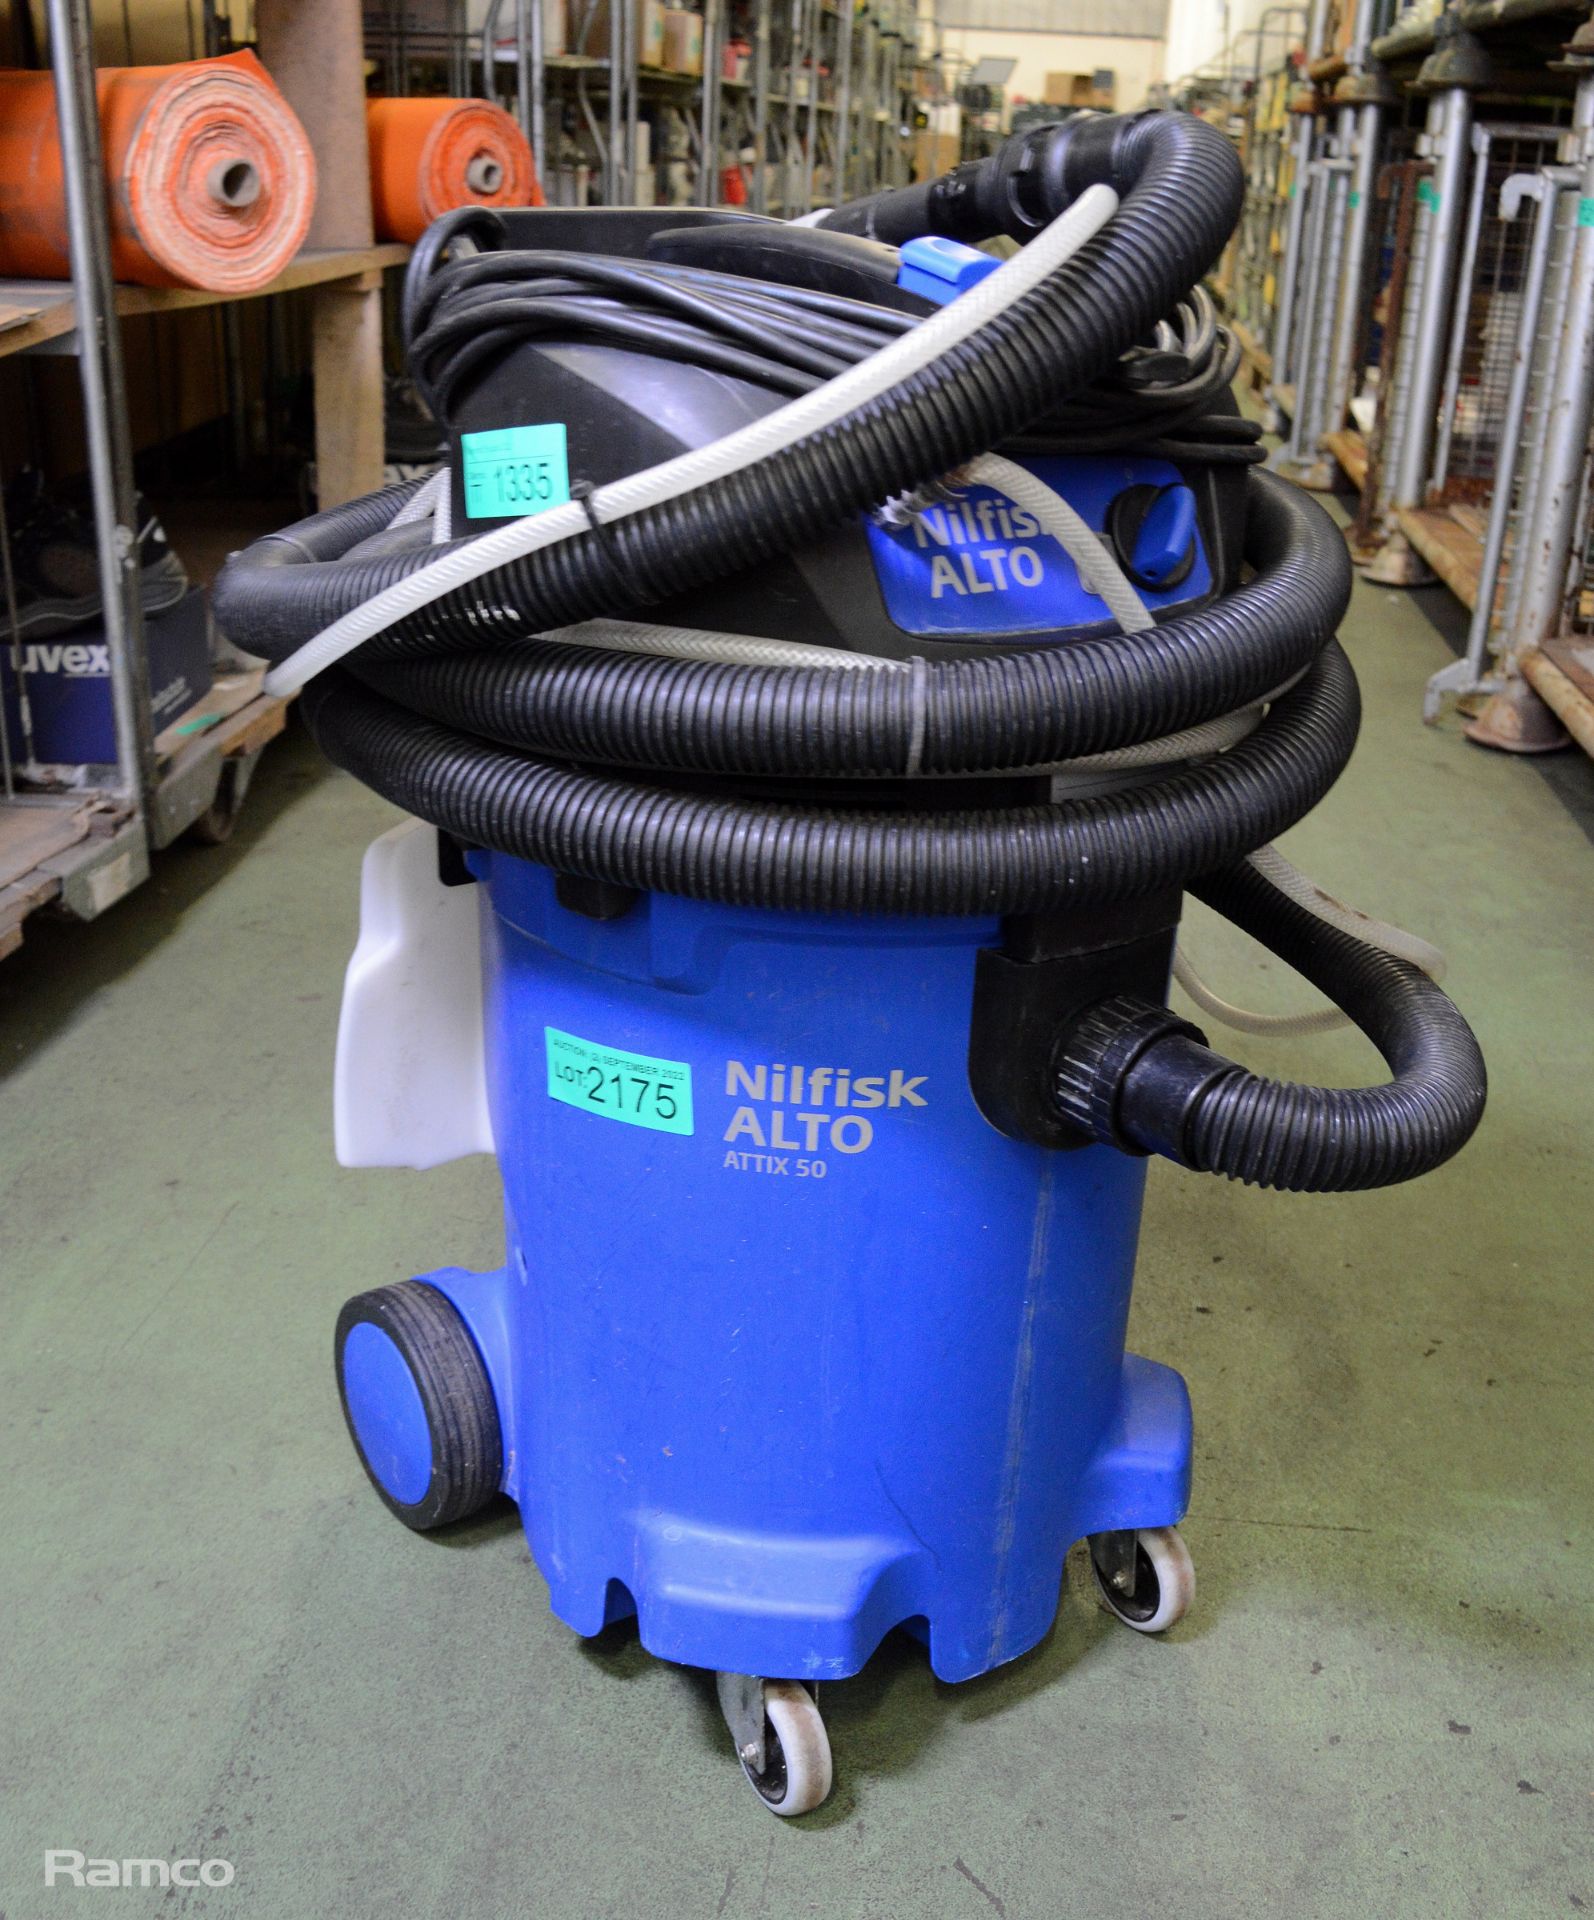 Nilfisk ALto Attix wet & dry vacuum cleaner - Image 3 of 6